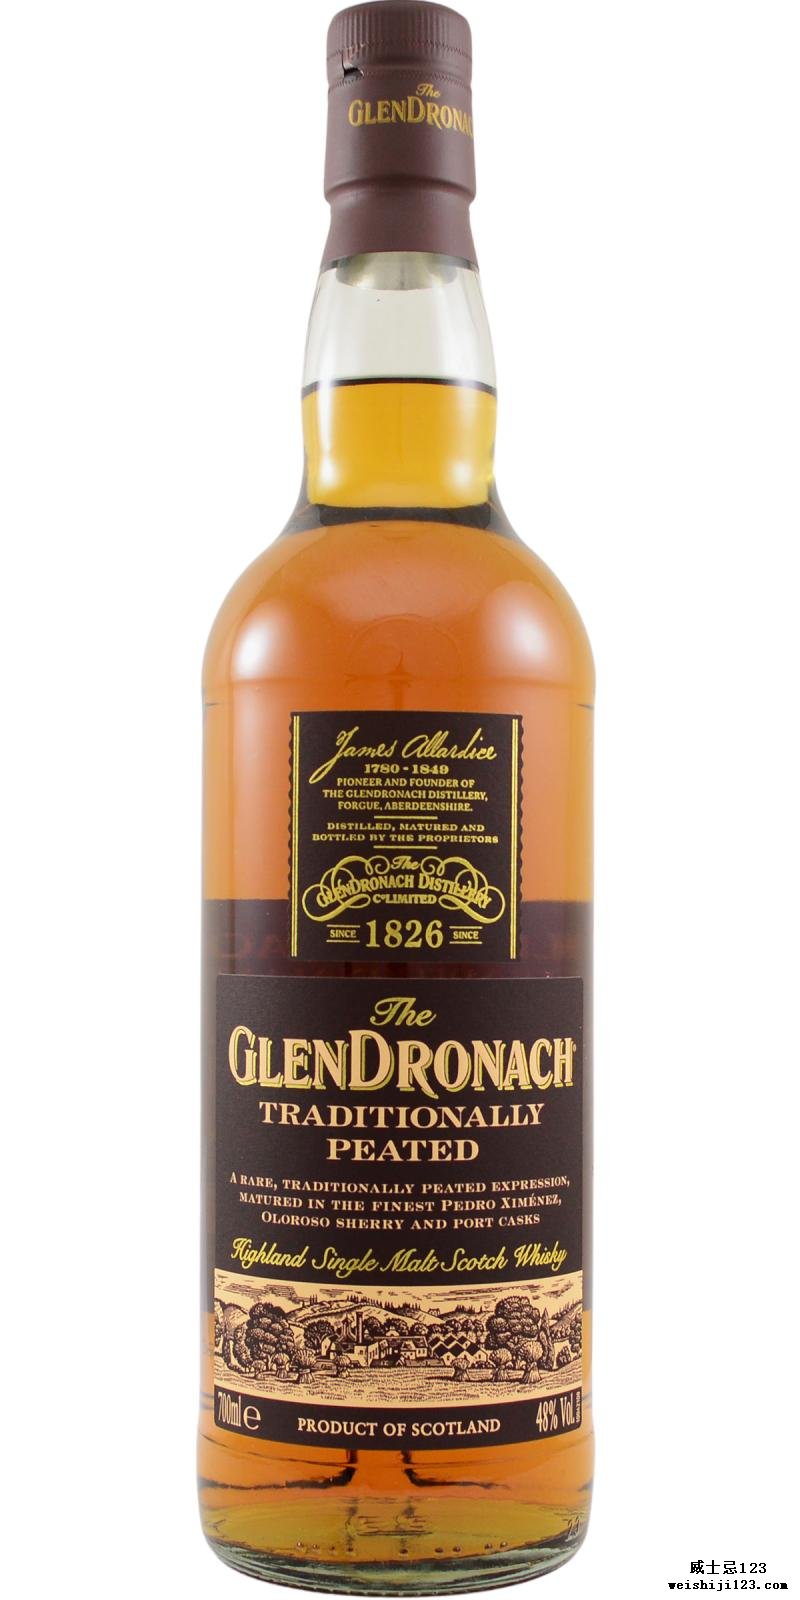 Glendronach Traditionally Peated